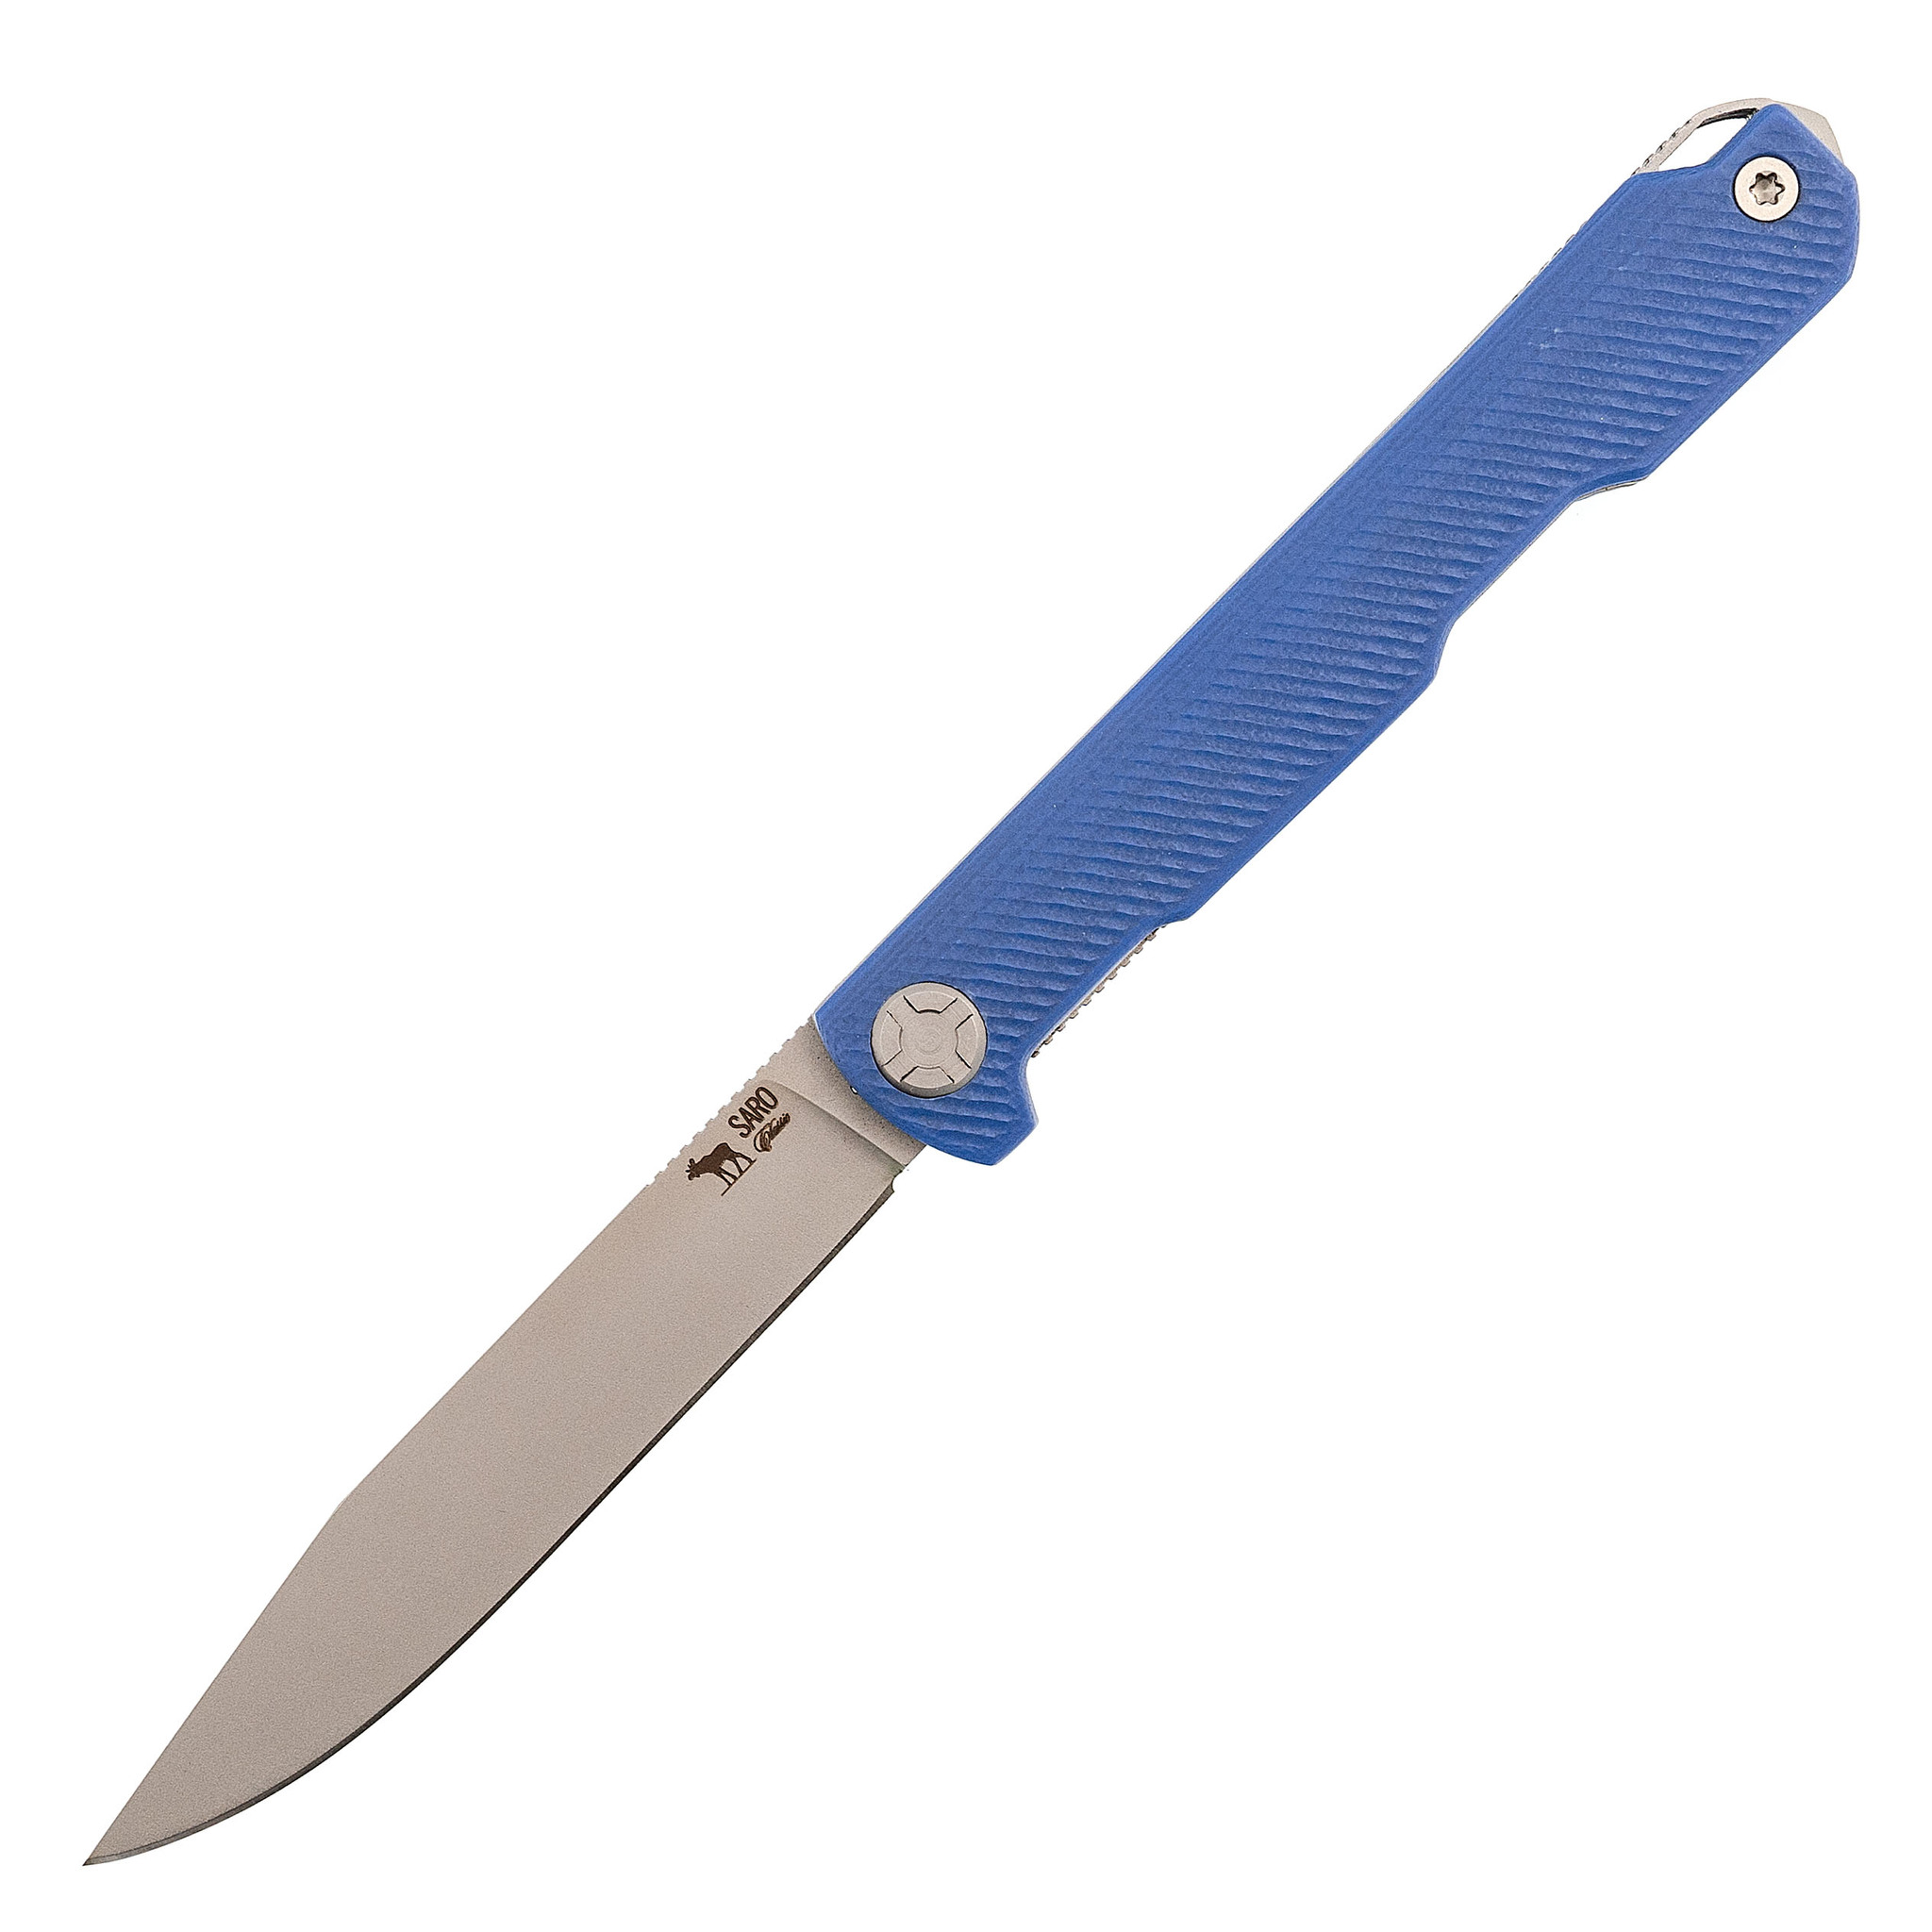 Складной нож Авиационный Single, сталь N690, рукоять G10, синий